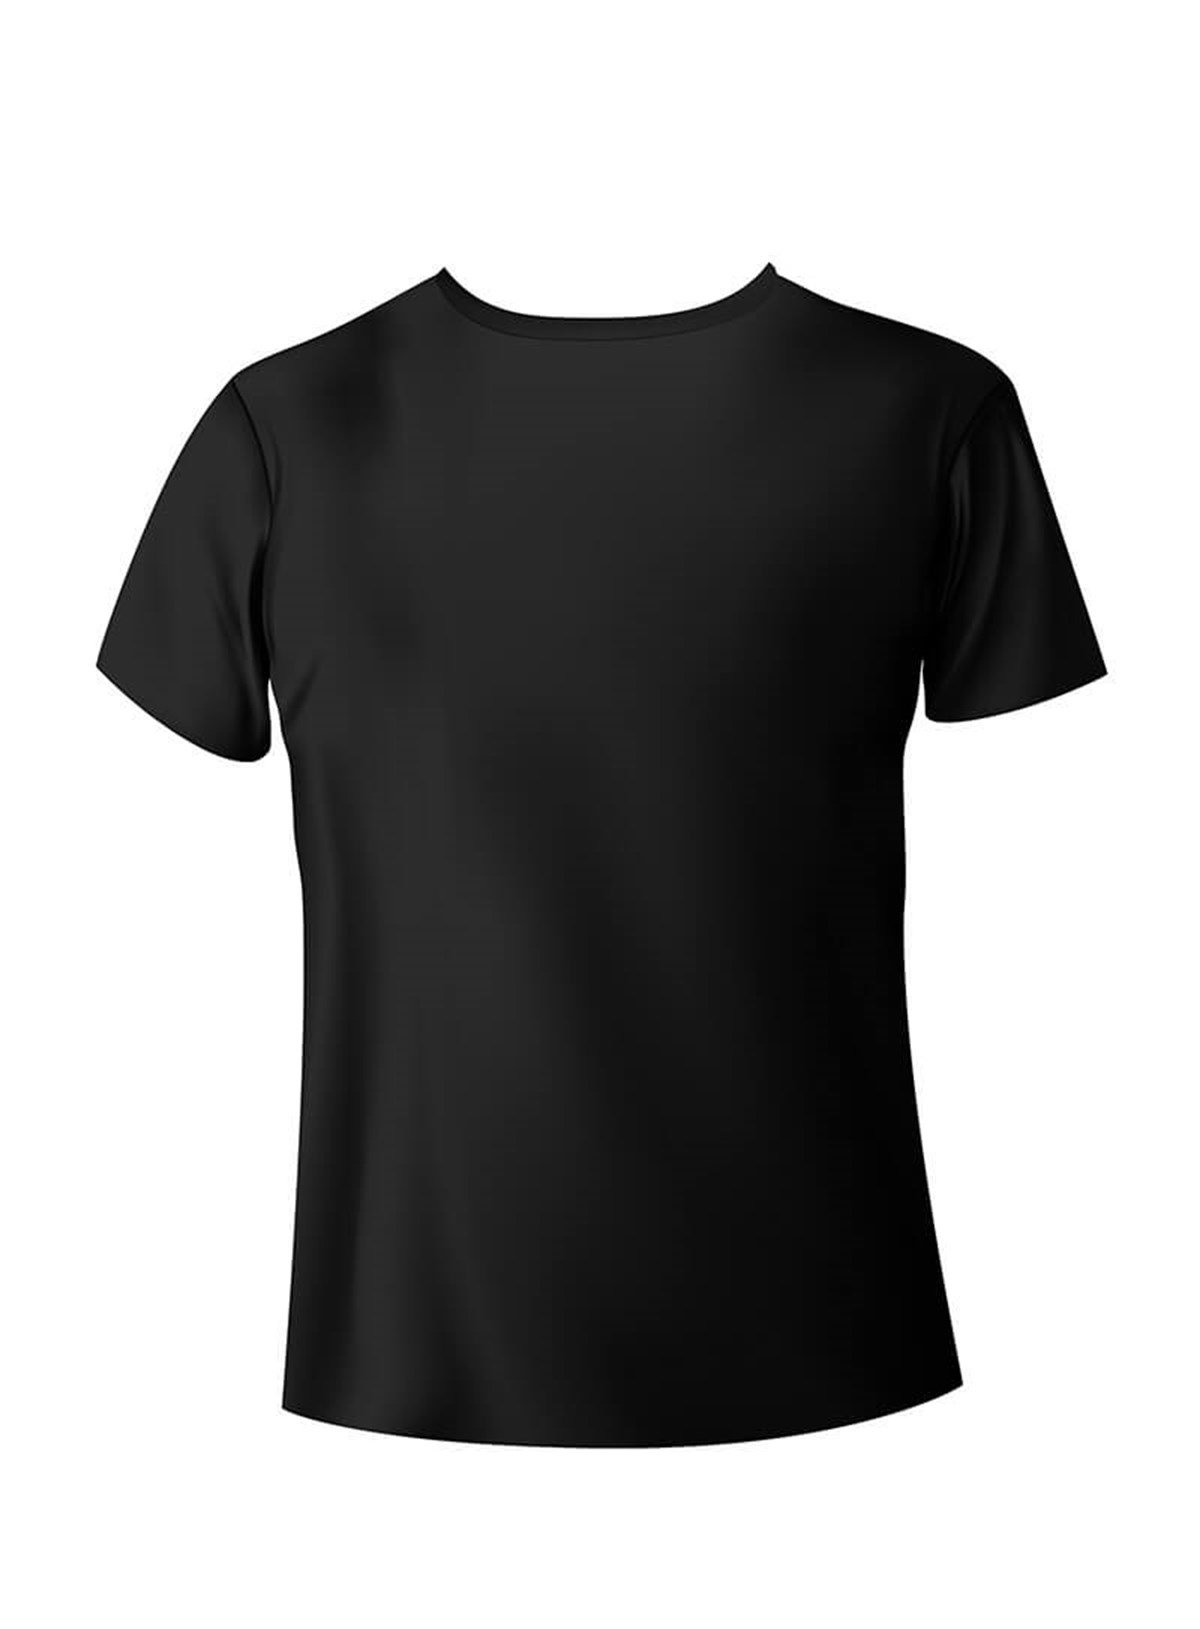 Börü Türk Baskılı Siyah Basic T-shirt | Teknobutik.com